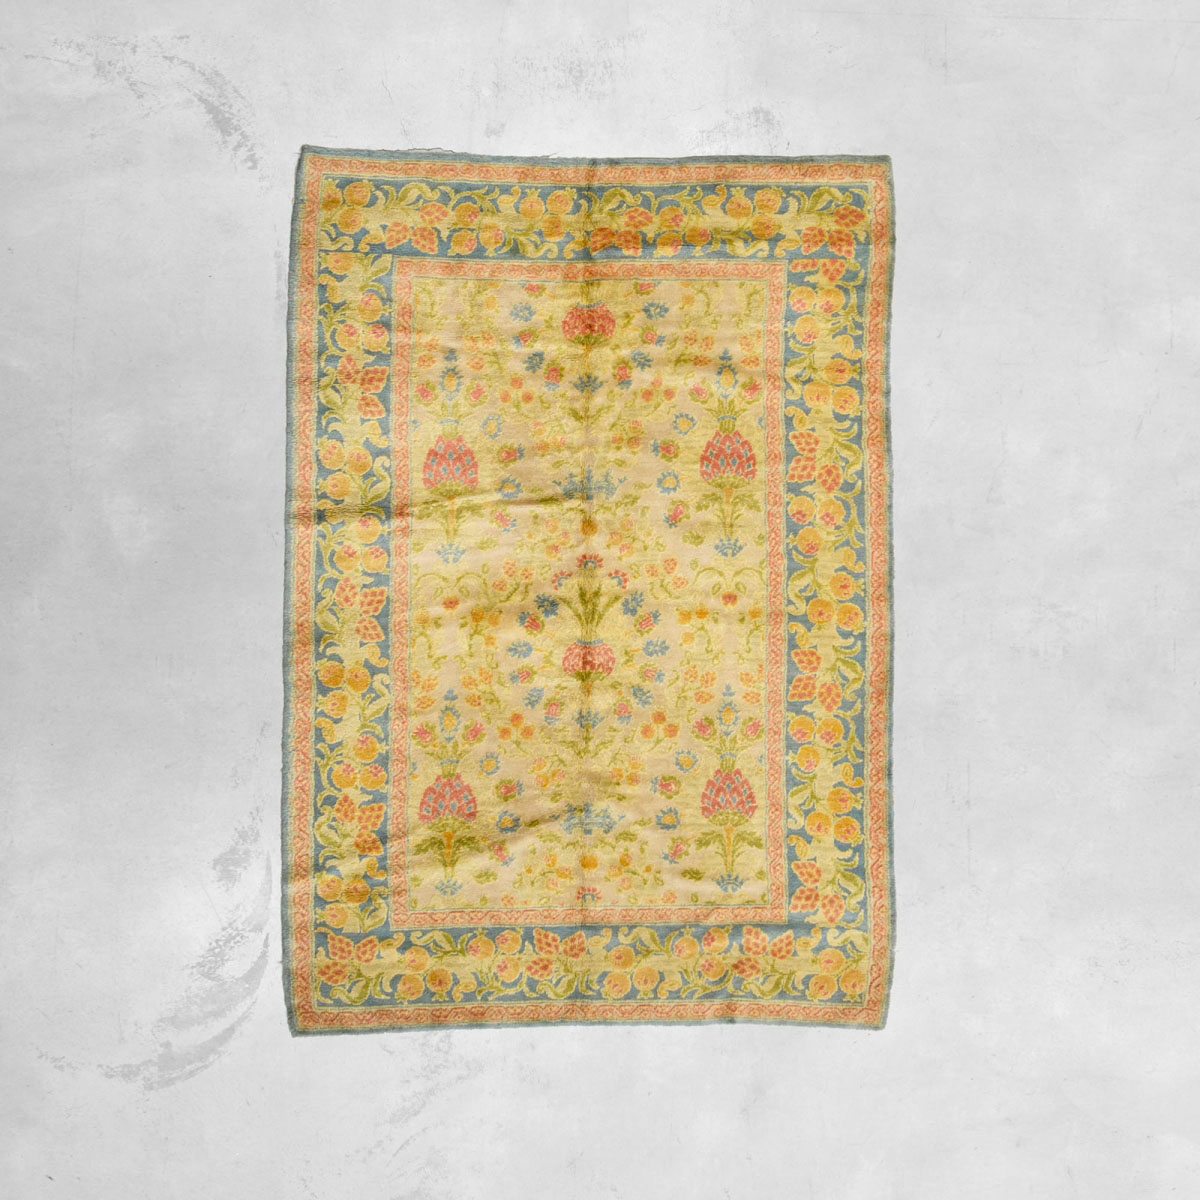 Cuenca Carpet | 264 x 188 cm  Antique carpets - Spain  pic-1